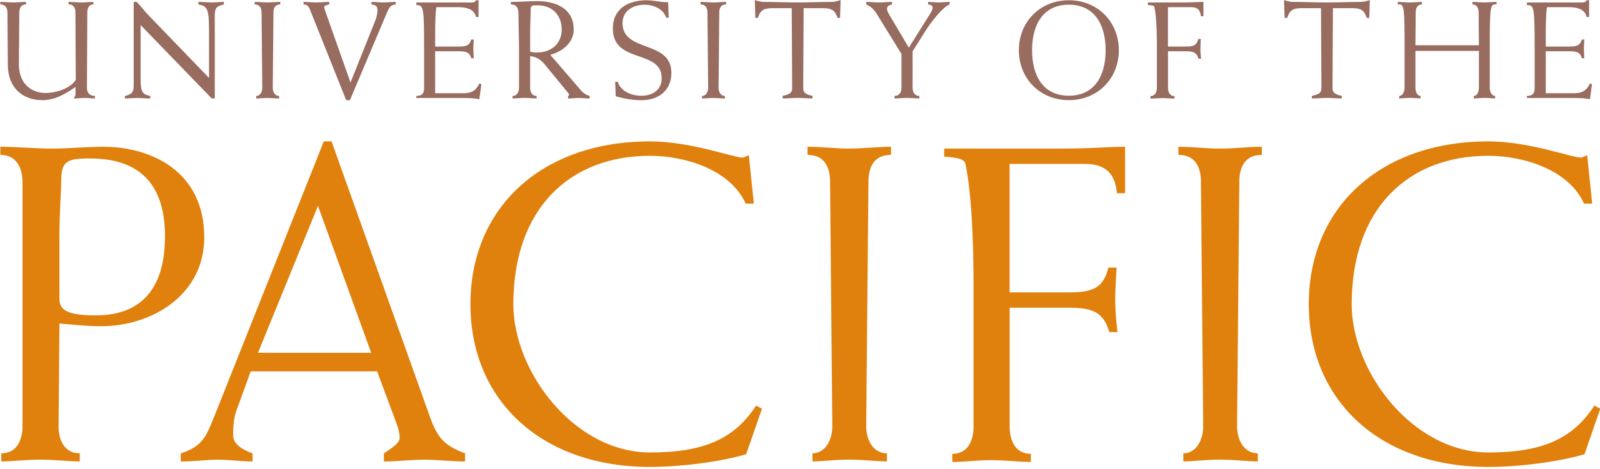 University_of_the_Pacific logo